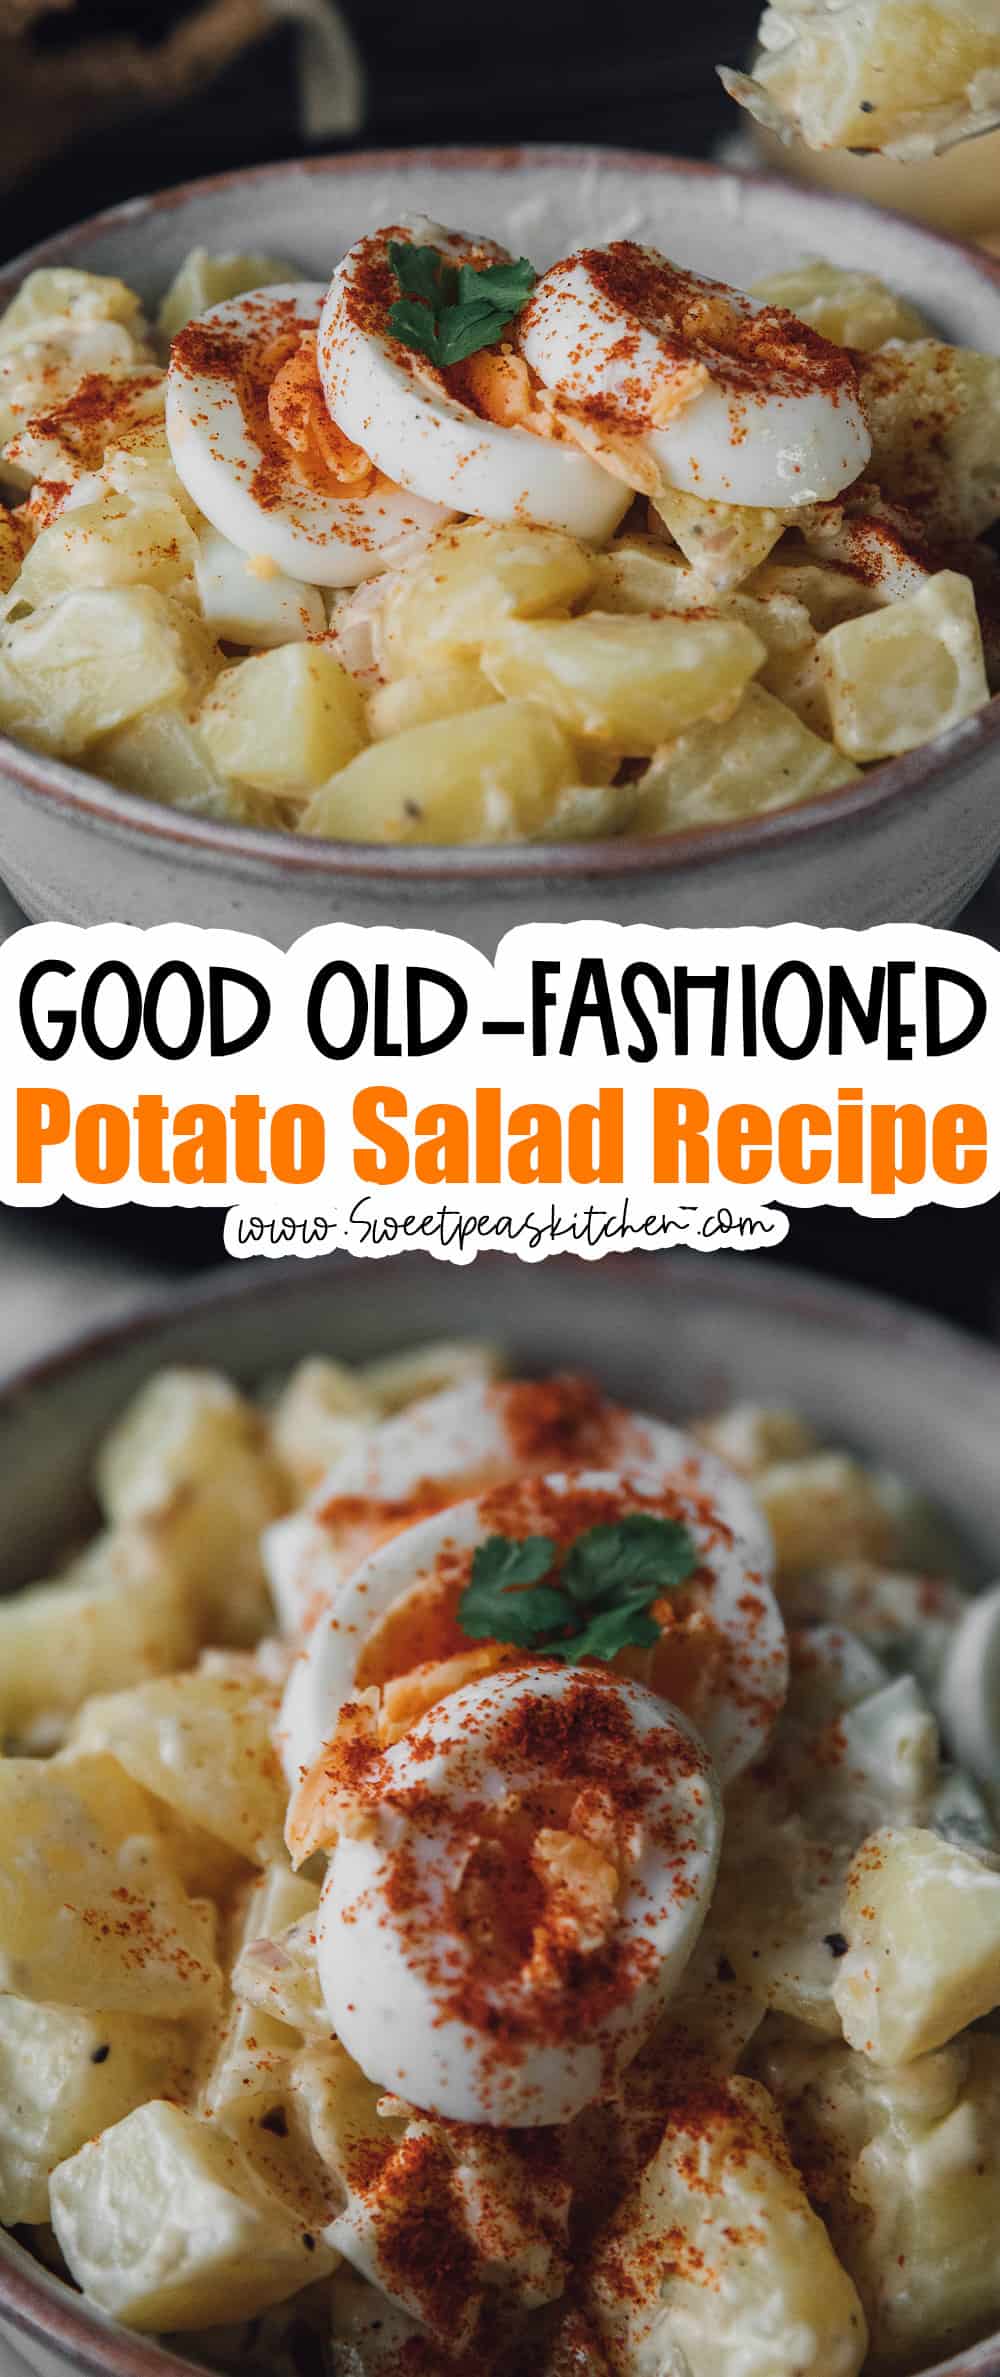 Old Fashioned Potato Salad on Pinterest